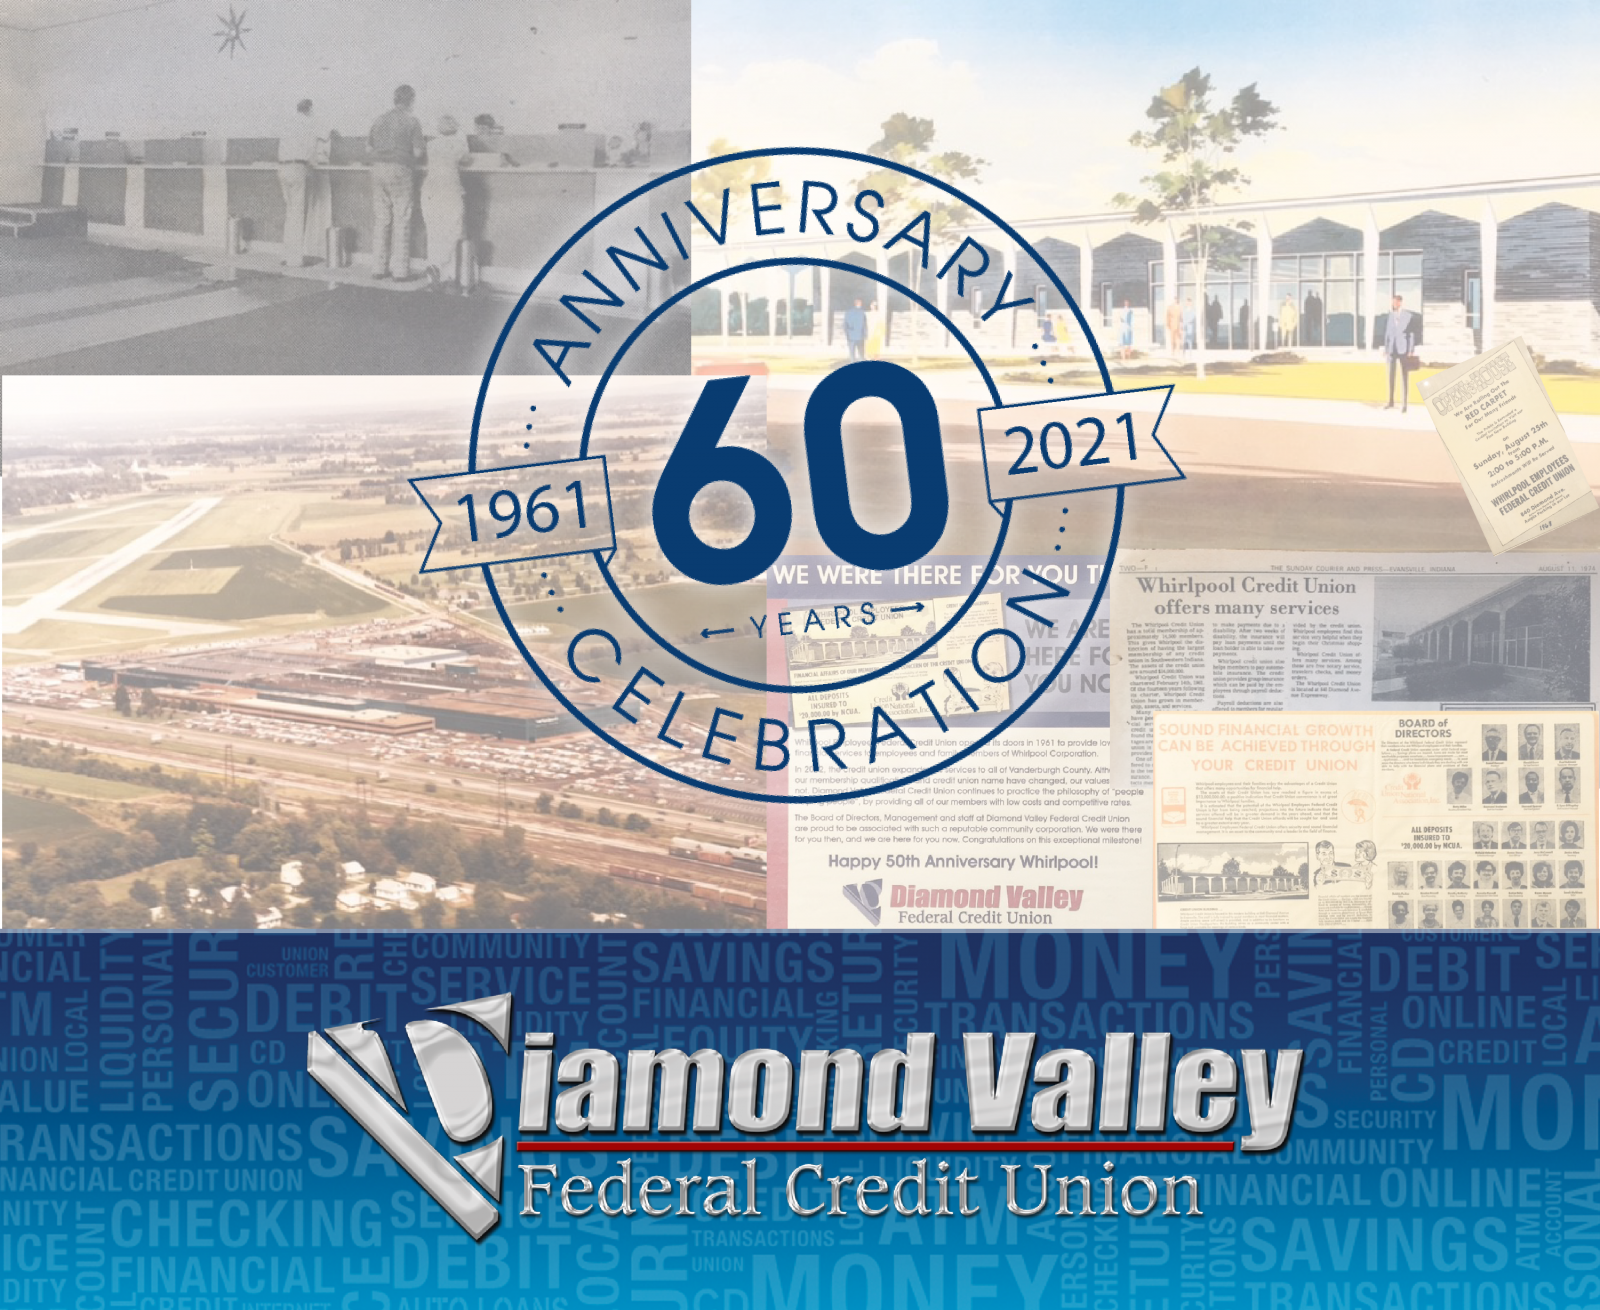 Diamond Valley Federal Credit Union Celebrates 60 Years!